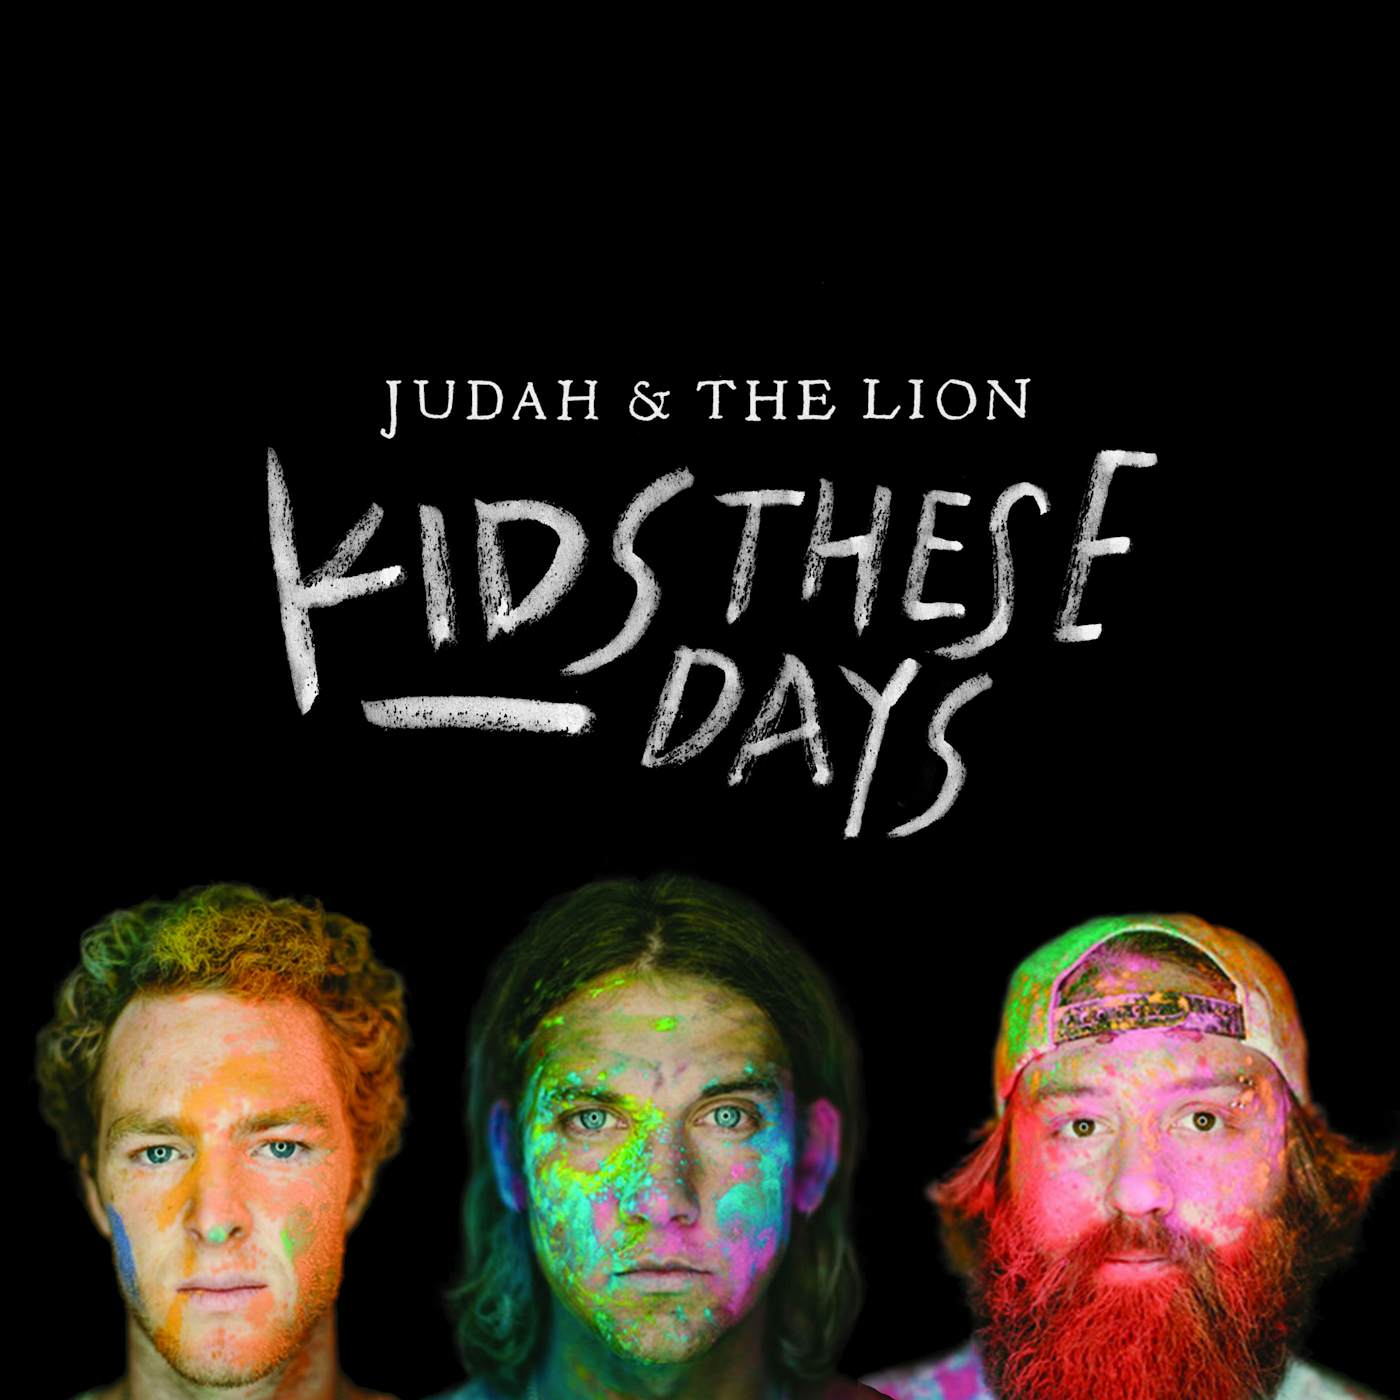 Judah & the Lion Kids These Days Vinyl Record